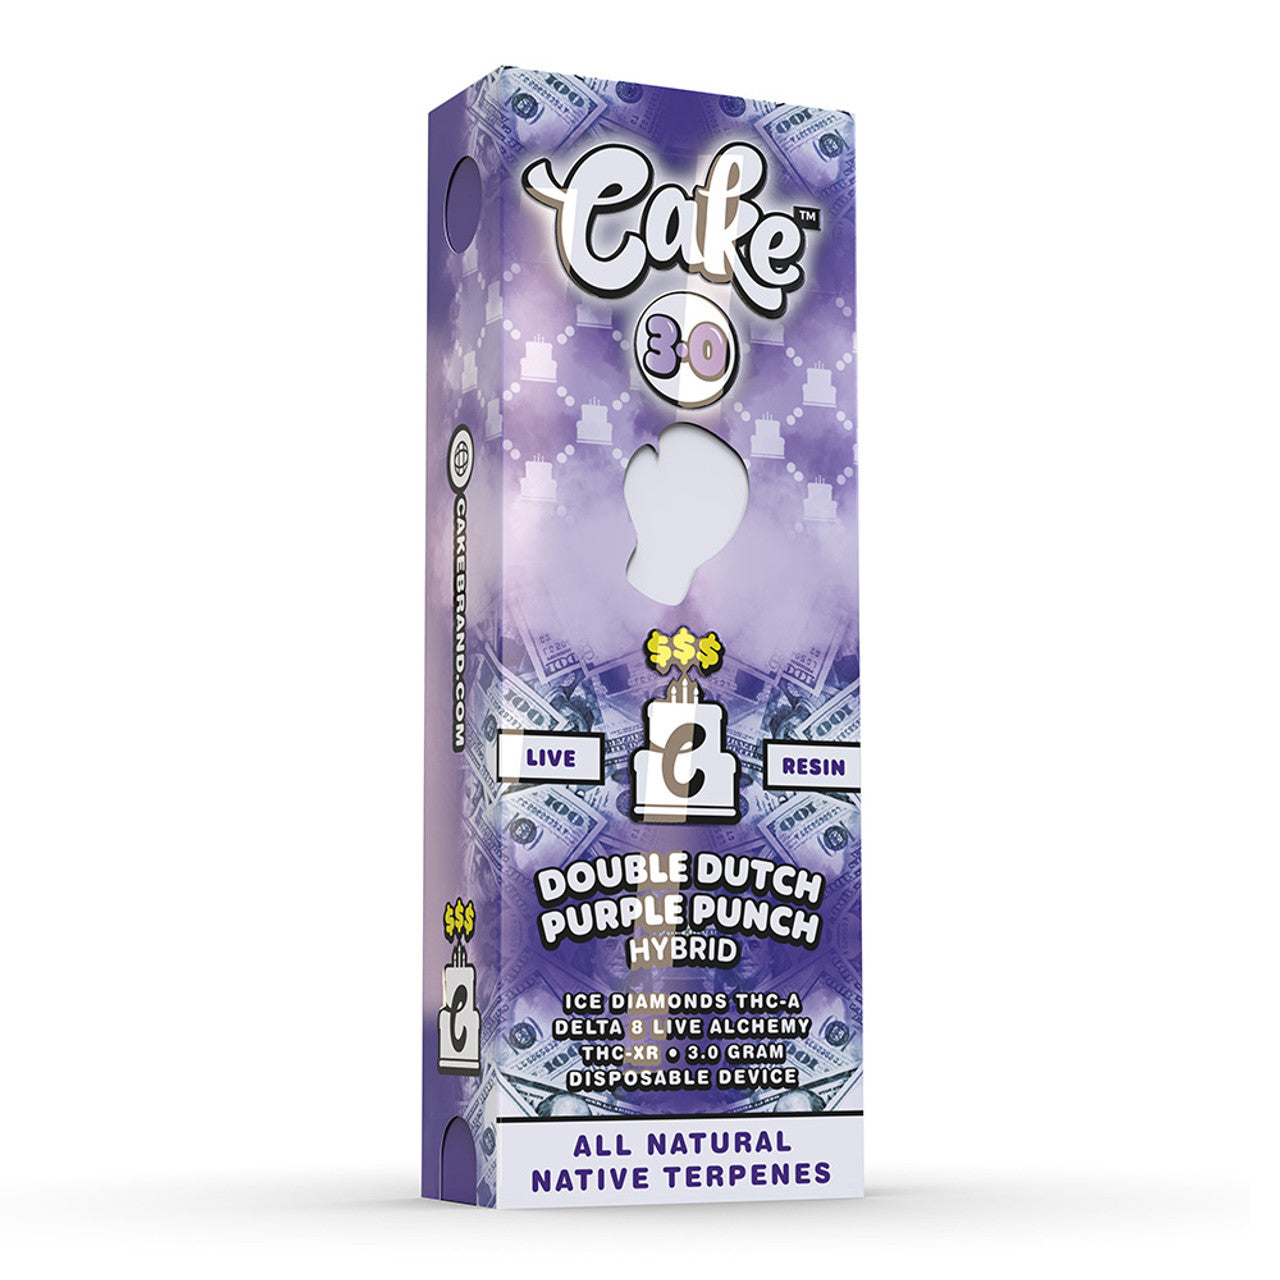 CAKE 3.0 Money Line Live Resin Ice Diamonds THC-A + Delta 8 Live Alchemy + THC-XR Disposable 3G - Double Dutch Purple Punch (Hybrid)